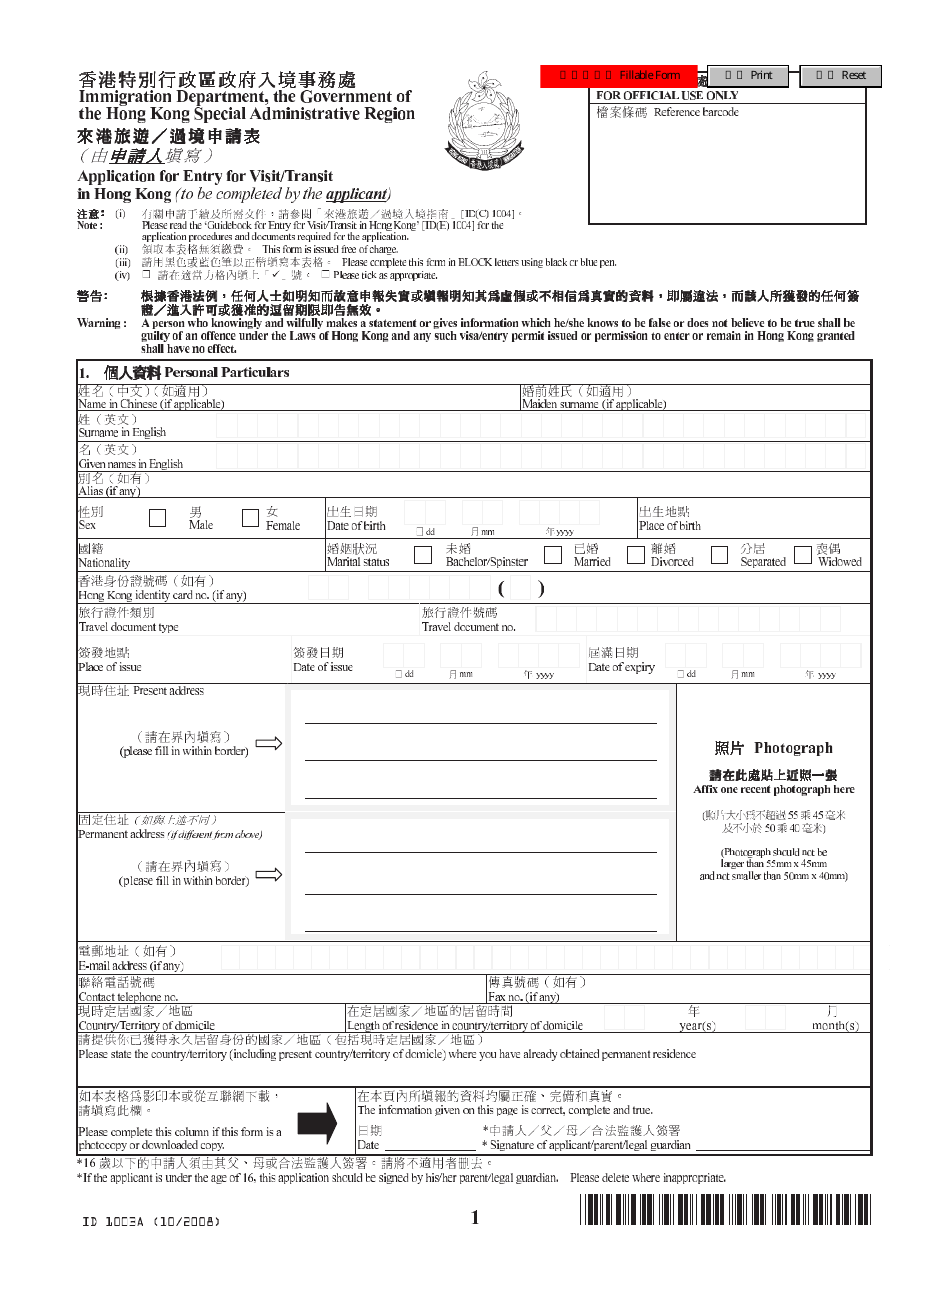 Form ID1003A Application for Entry to Visit / Transit in Hong Kong - Hong Kong (English / Chinese), Page 1